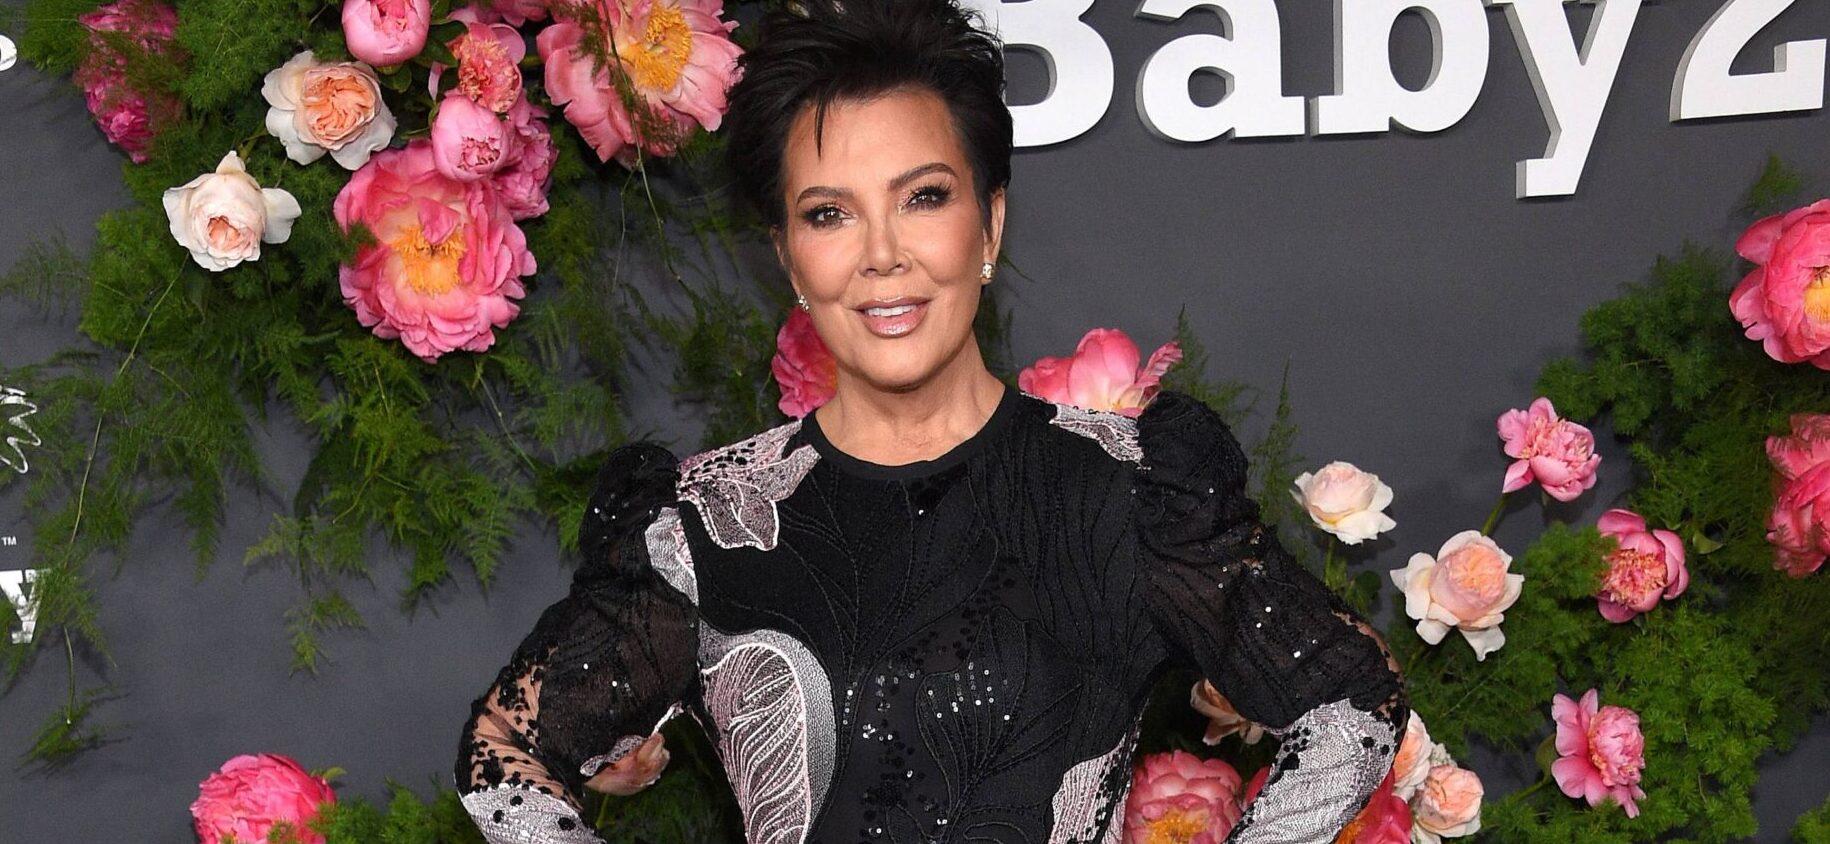 Kris Jenner Settles Lawsuit Over Allegedly Sexually Harassing Ex-Bodyguard